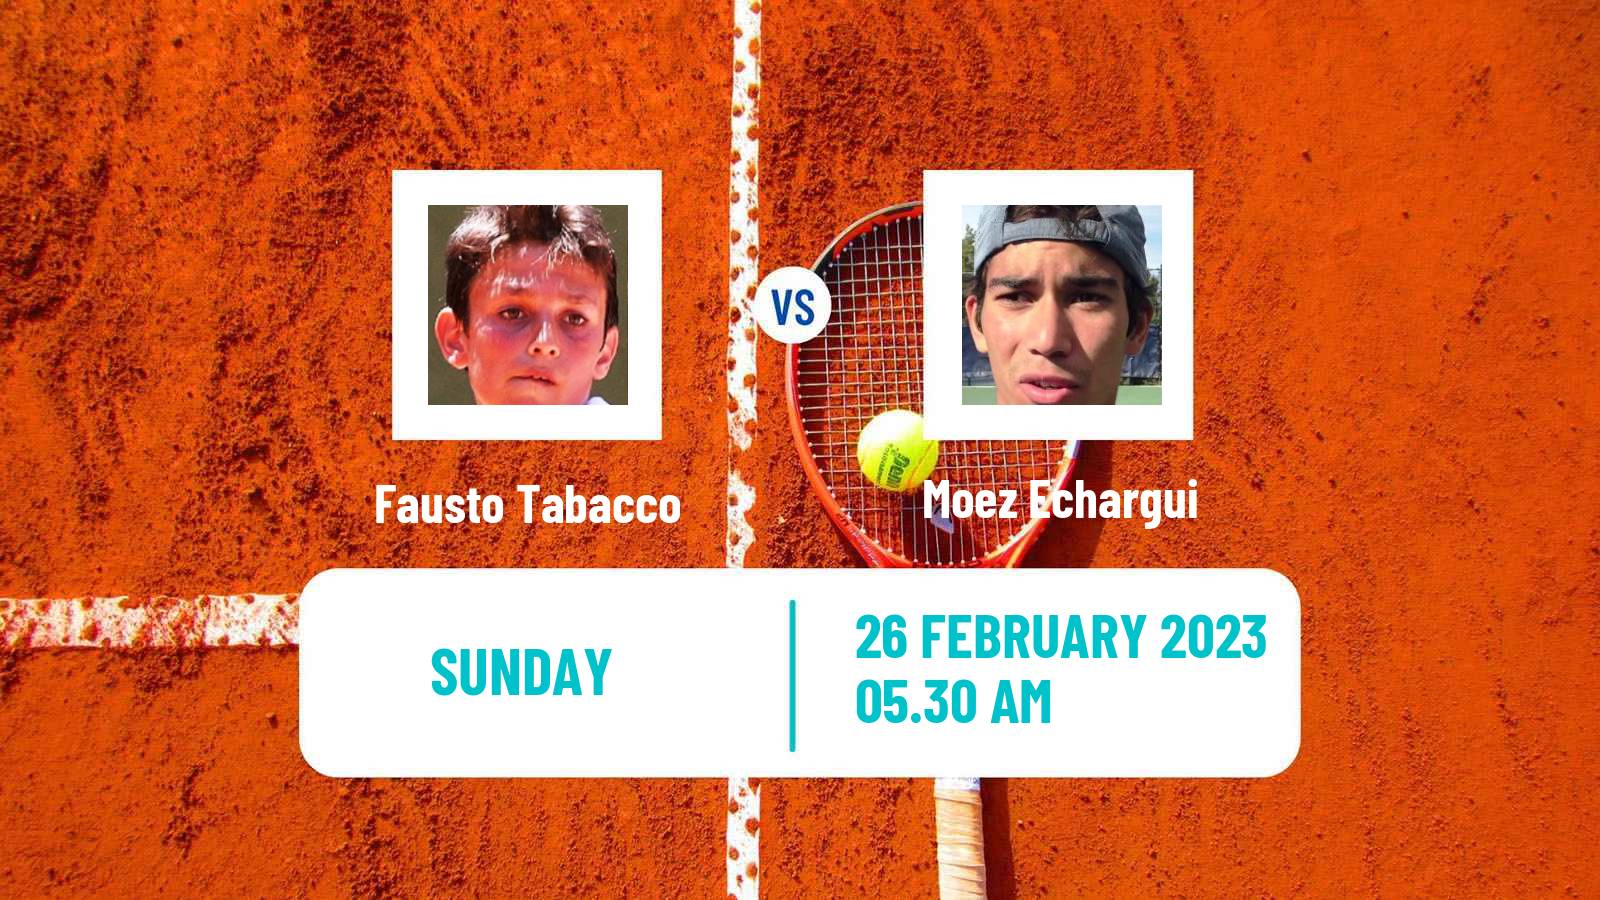 Tennis ITF Tournaments Fausto Tabacco - Moez Echargui